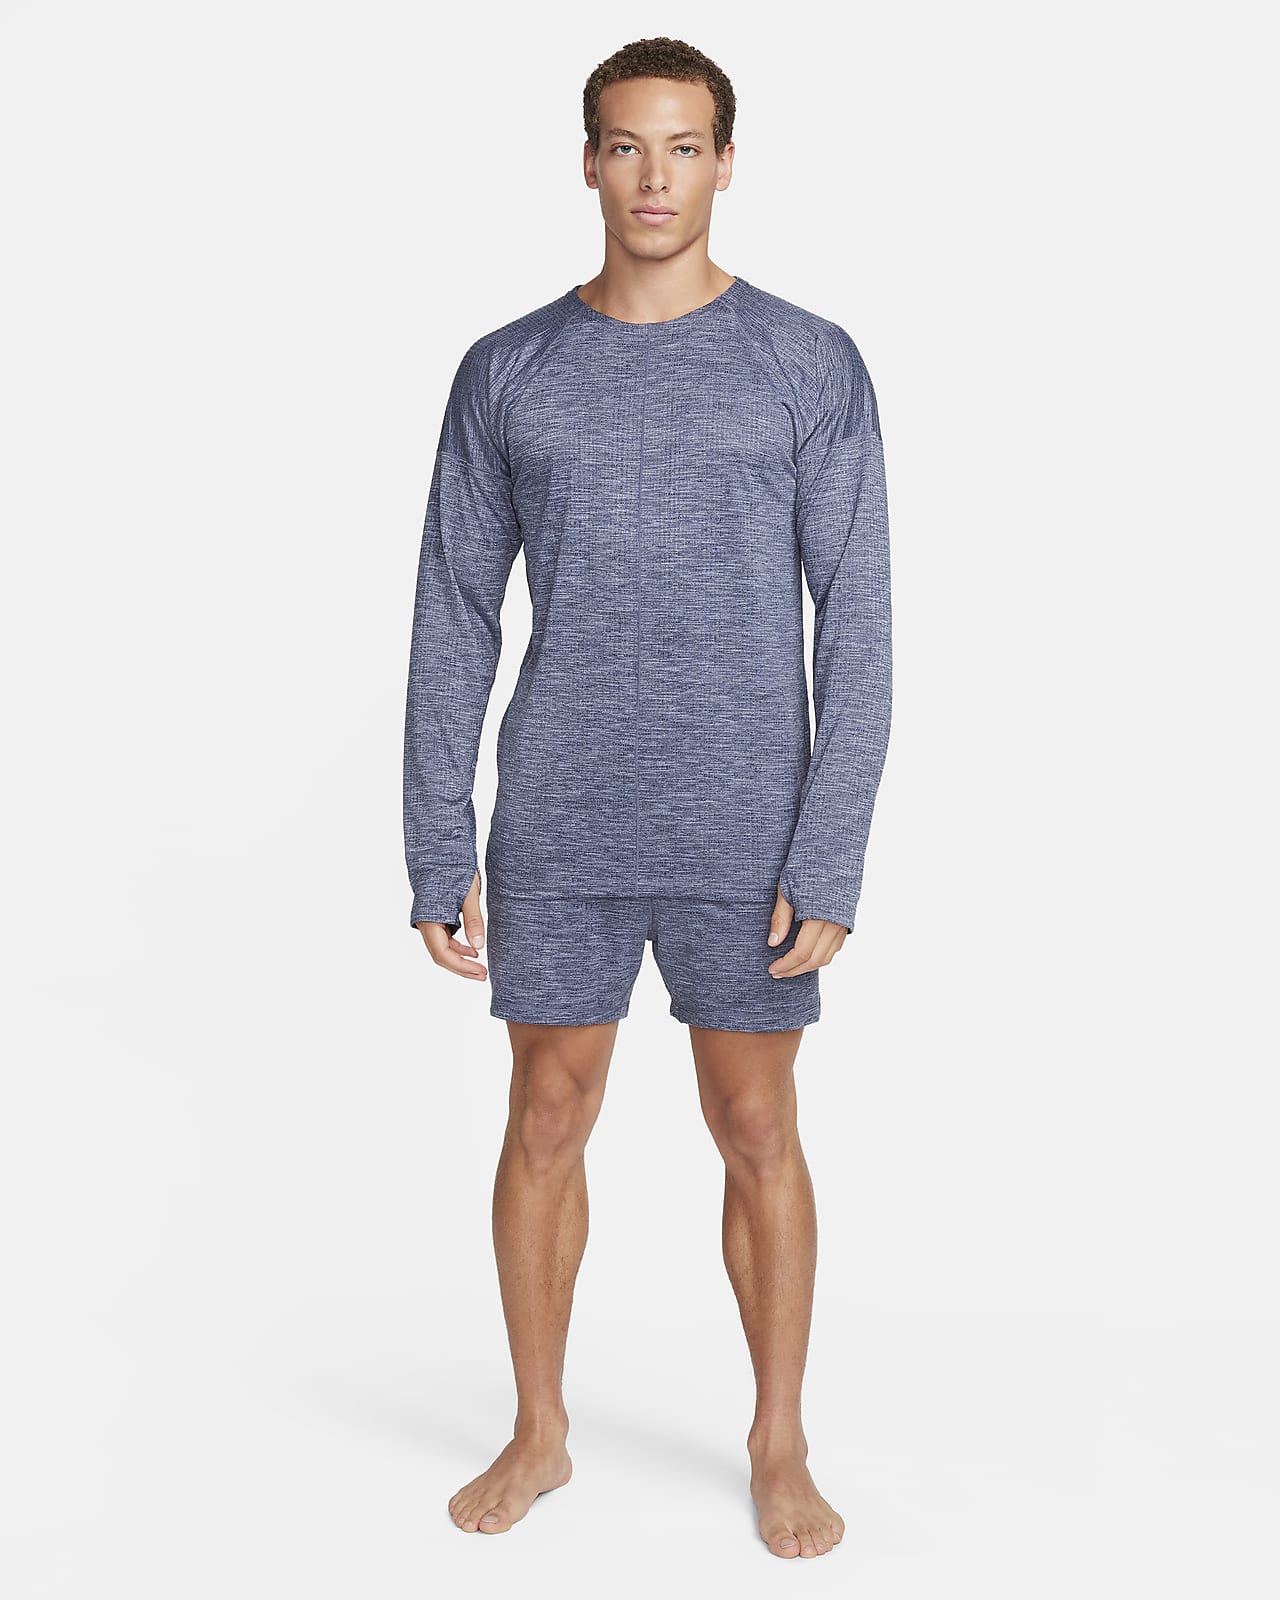 Nike Yoga Dri Fit Crew Long Sleeve T-Shirt Grey